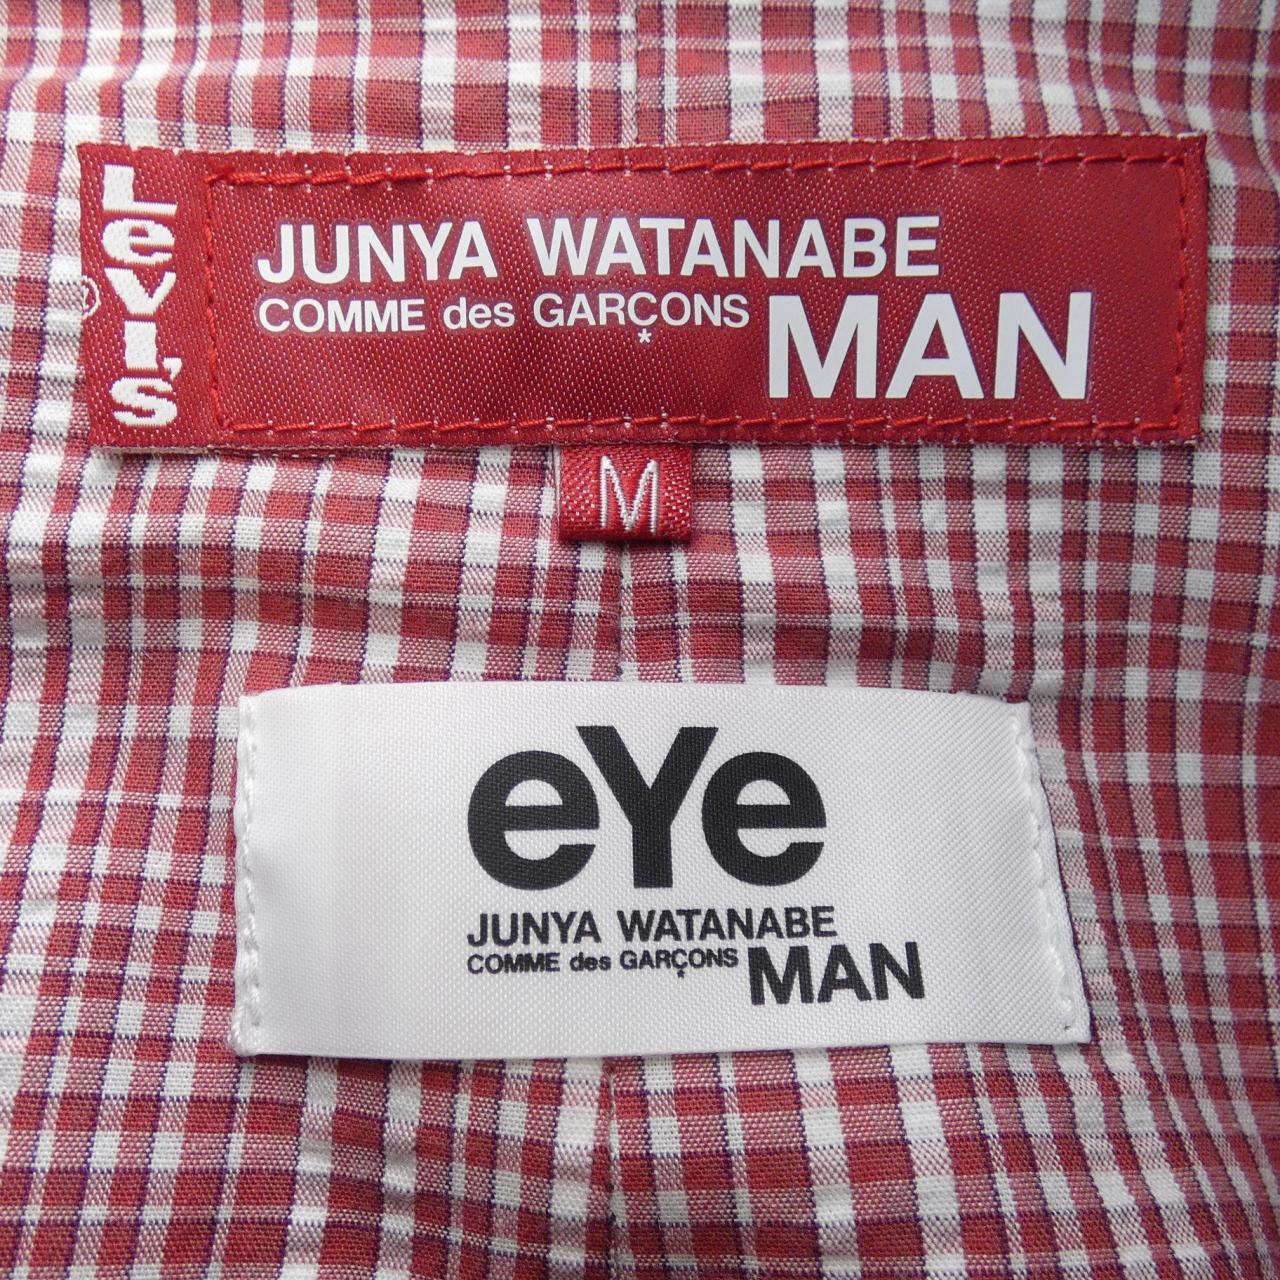 Ijuna Watanabe eye JUNYA WATANABE夾克